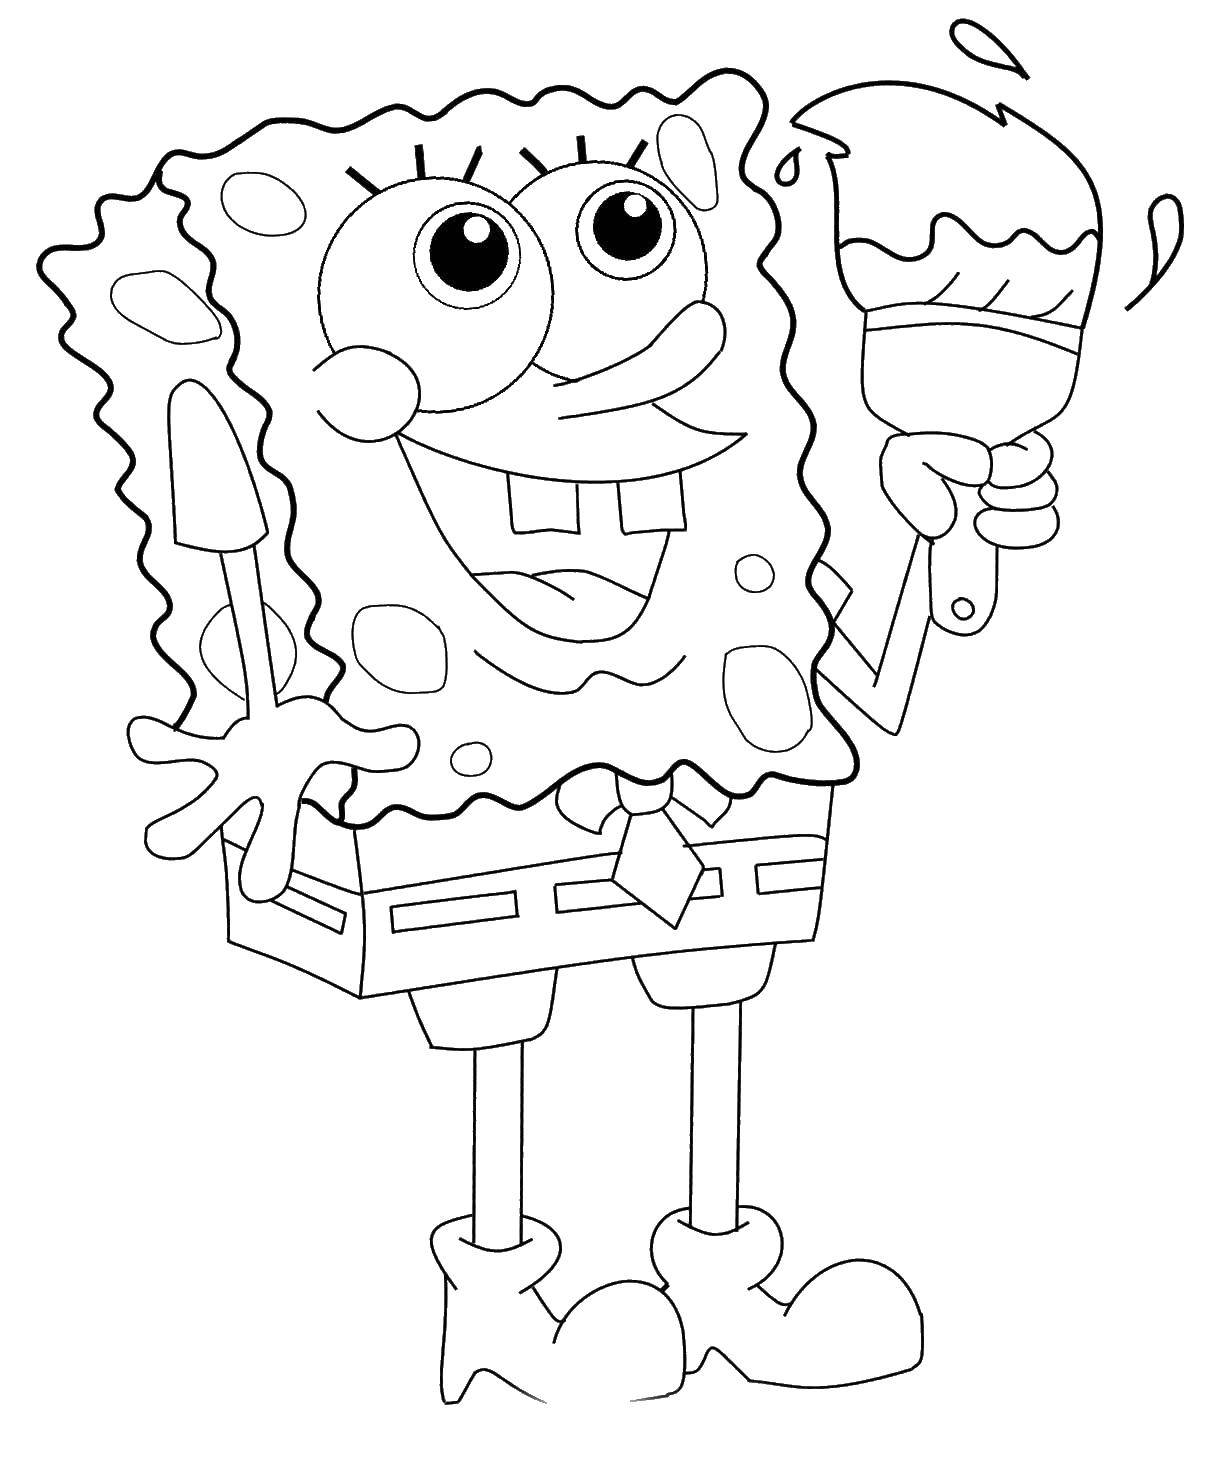 Coloring Spongebob with tassel. Category Spongebob. Tags:  The spongebob, Patrick.